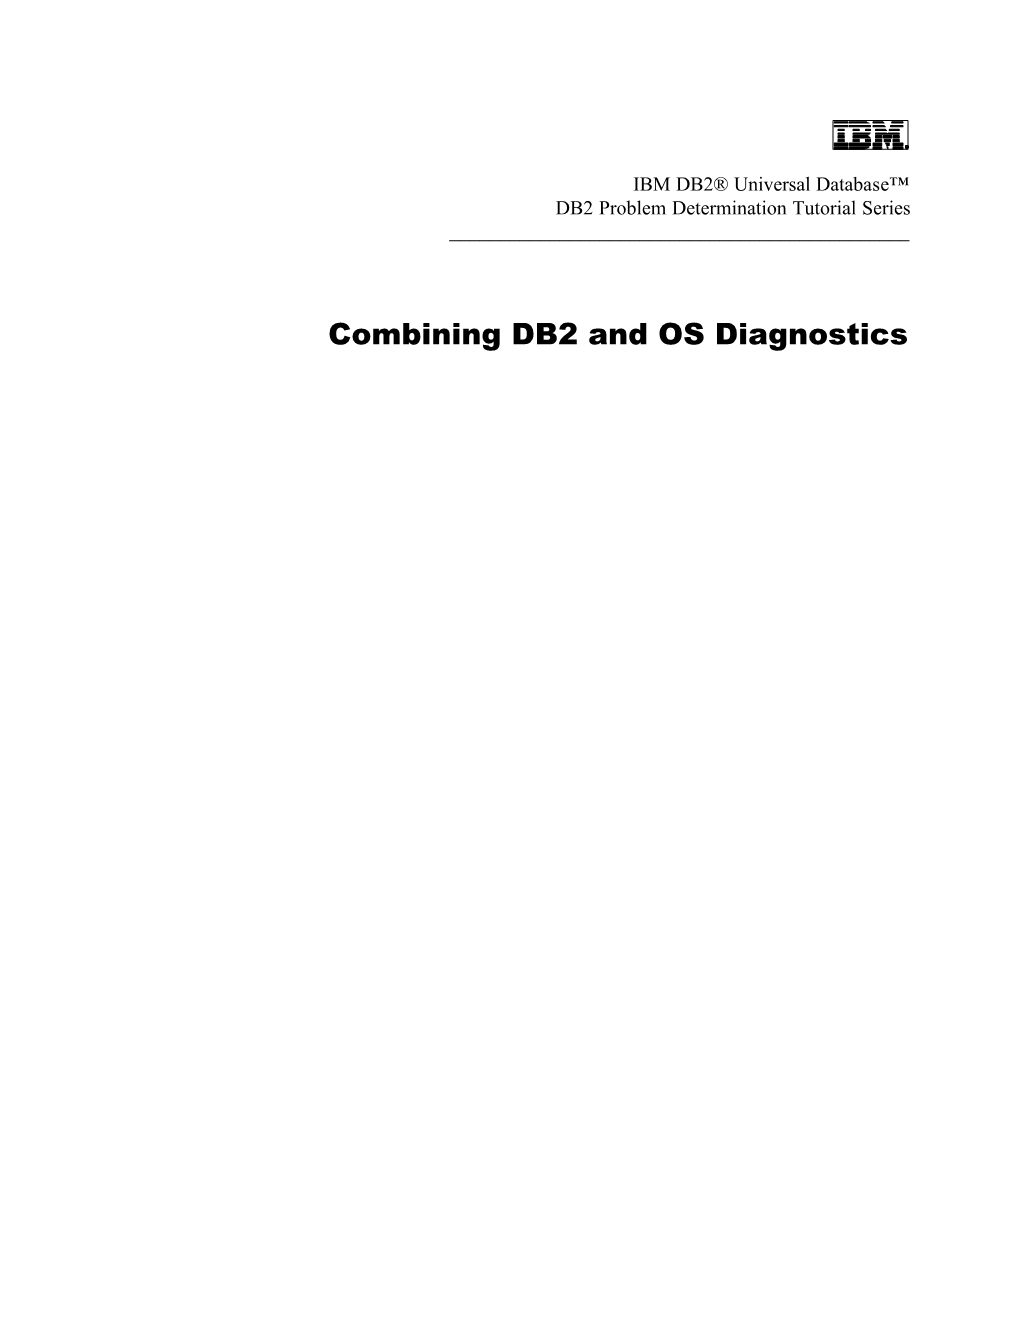 Combining DB2 and OS Diagnostics DB2 Problem Determination Tutorial Series Combining DB2 and OS Diagnostics ______